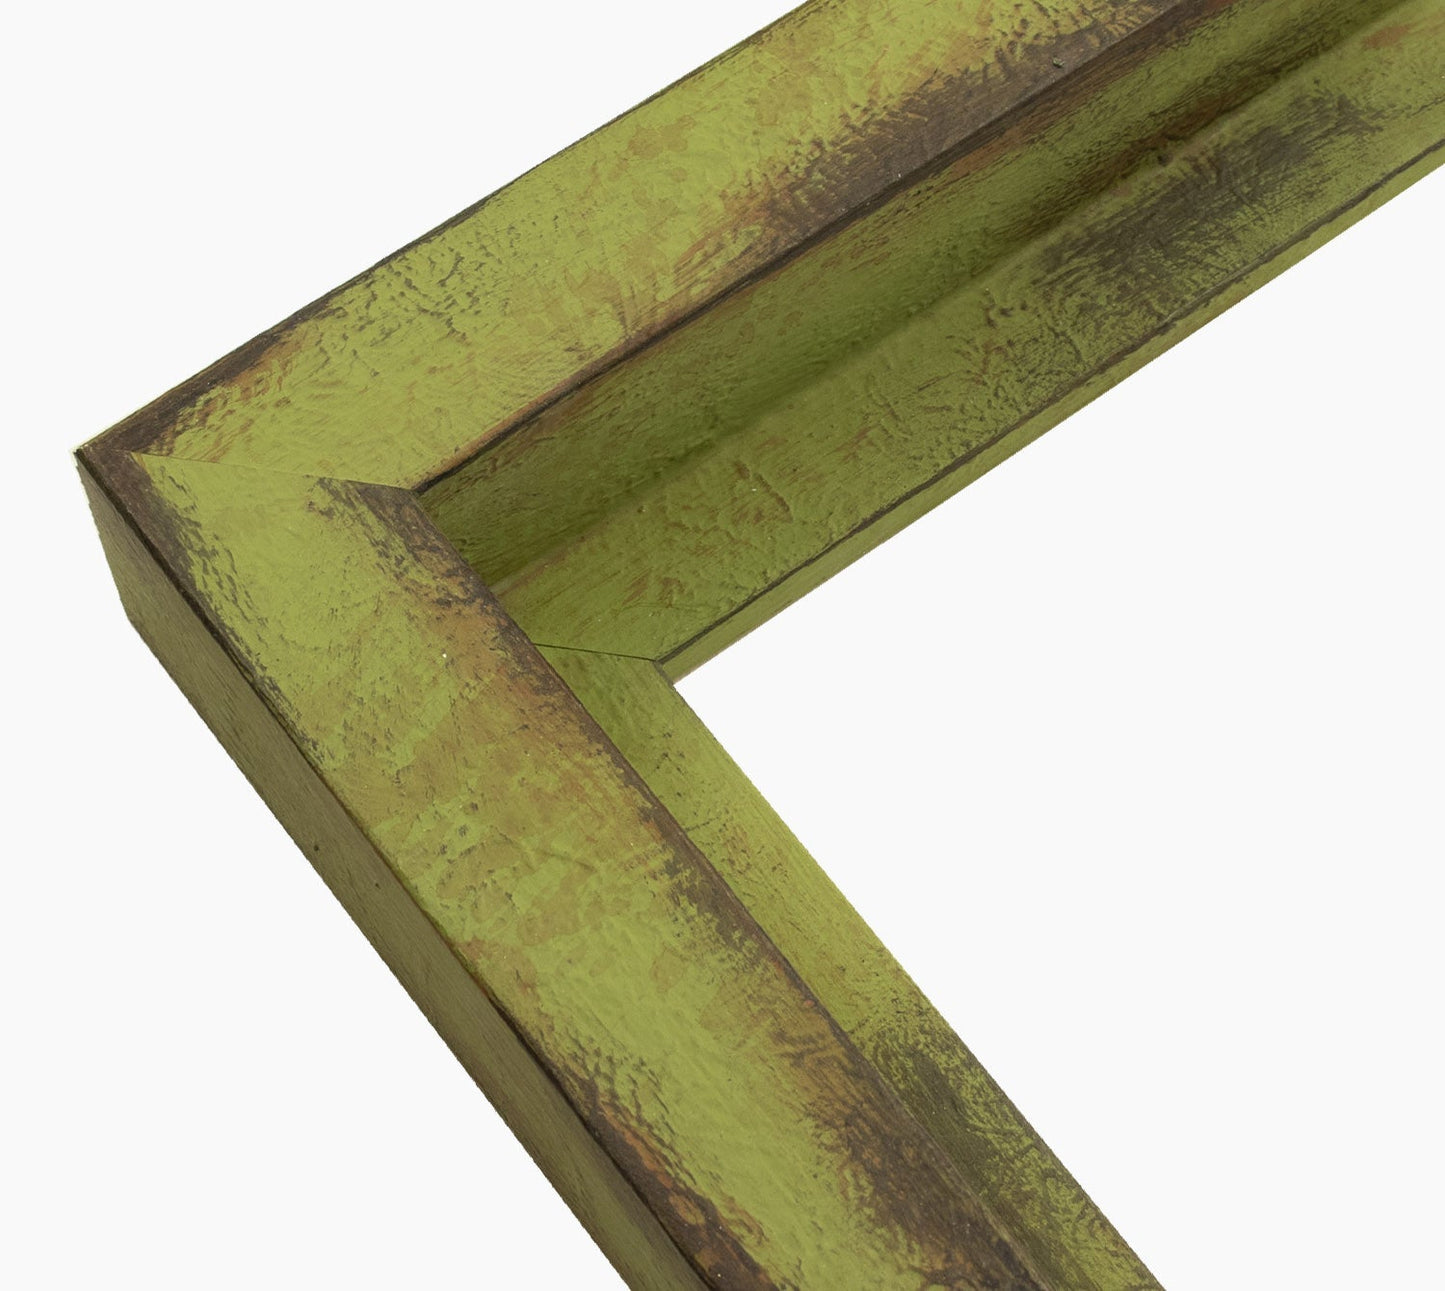 605.5302 cadre en bois effet rouille verte mesure de profil 60x55 mm Lombarda cornici S.n.c.